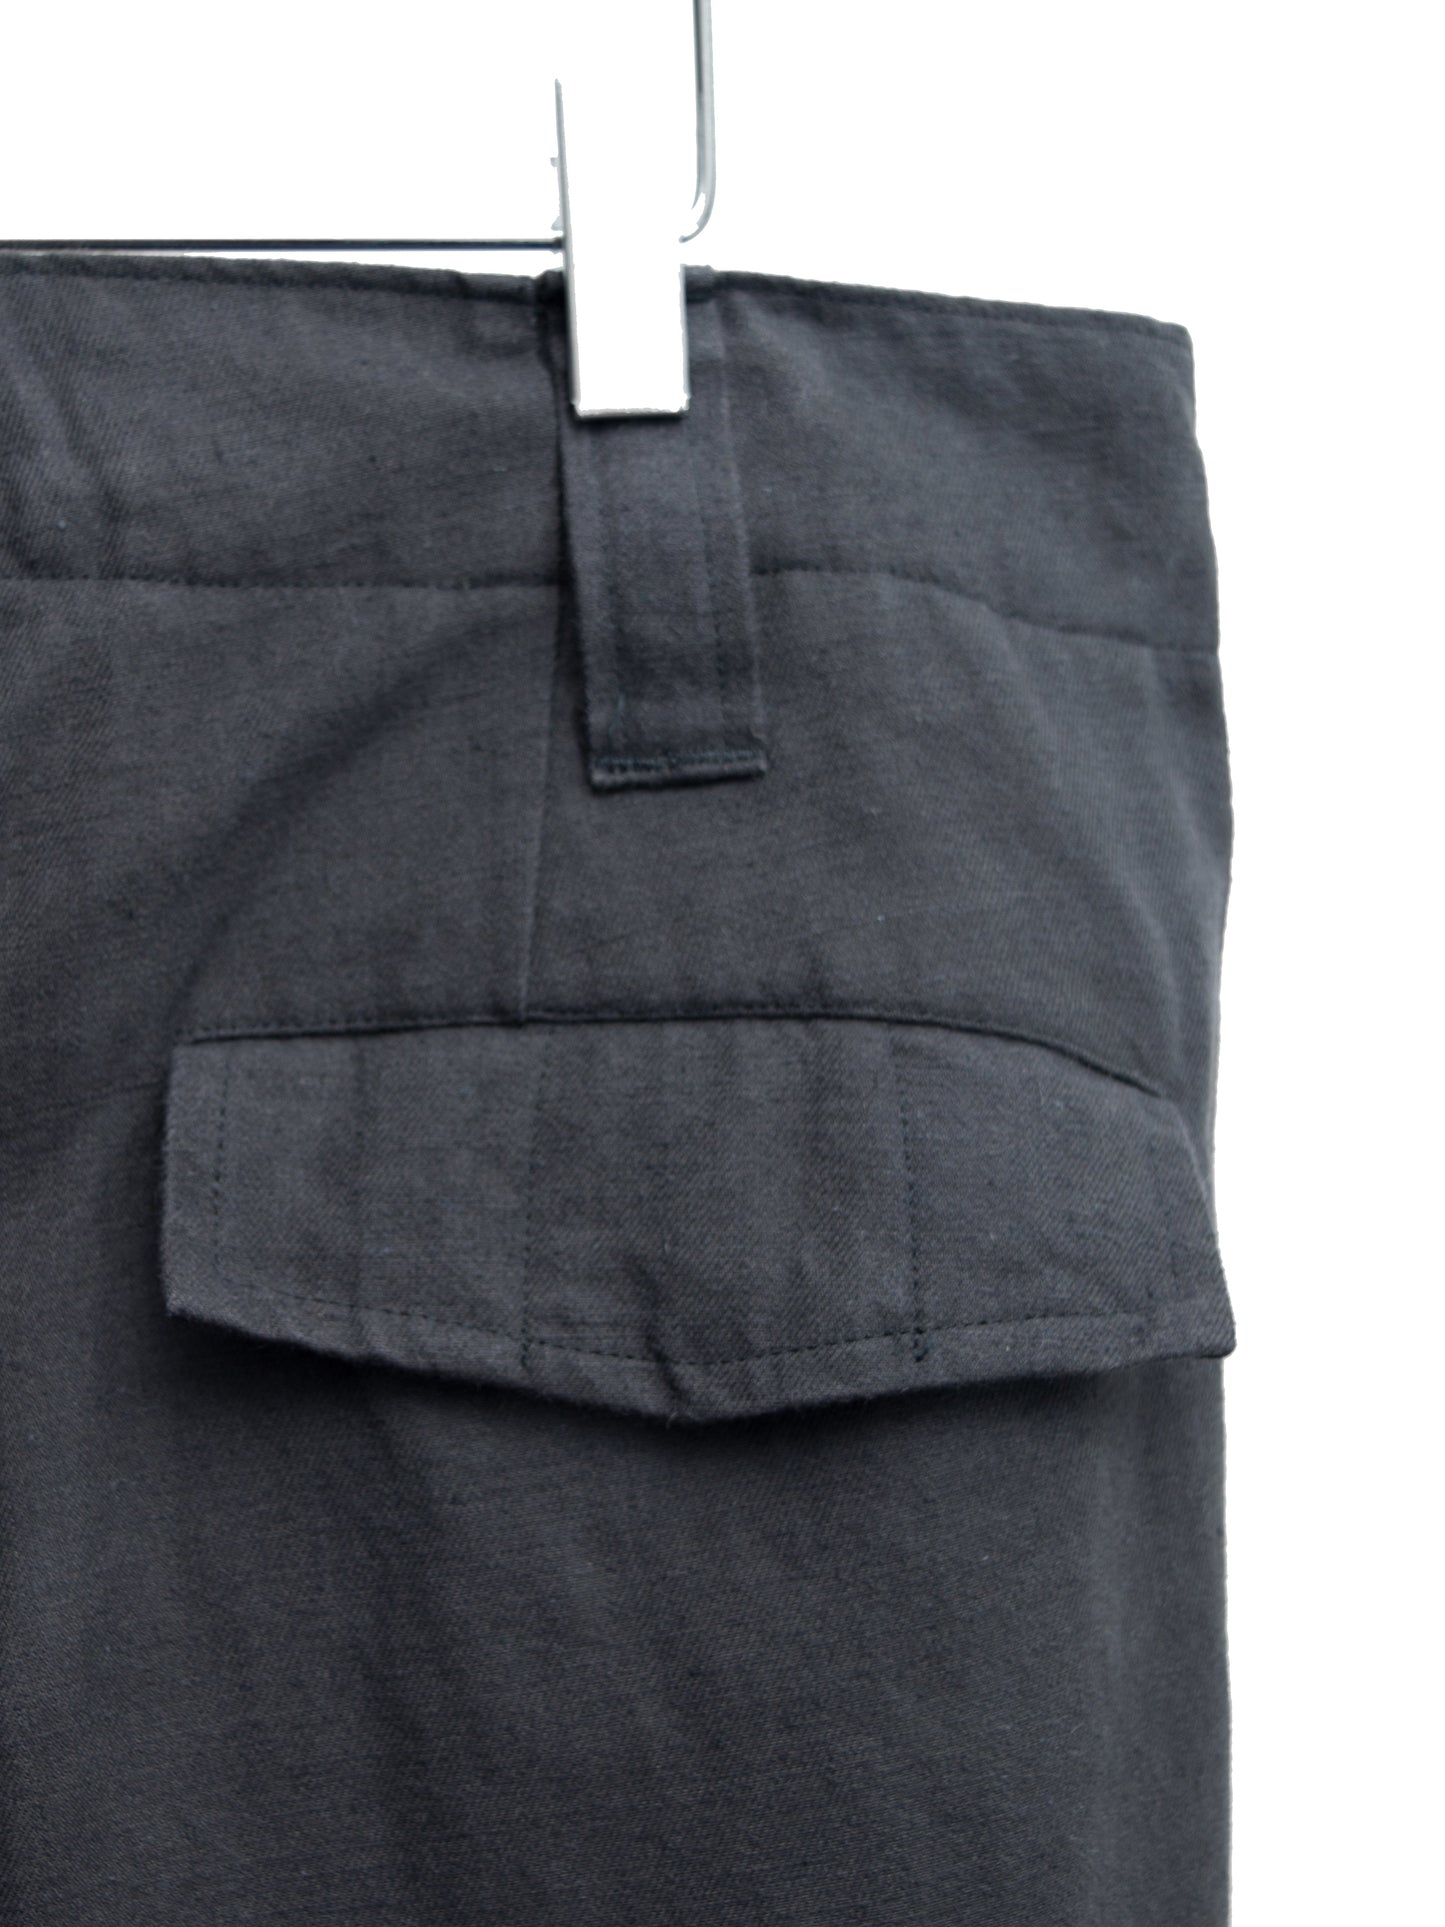 wide cargo pants dark grey ∙ linen cotton ∙ small